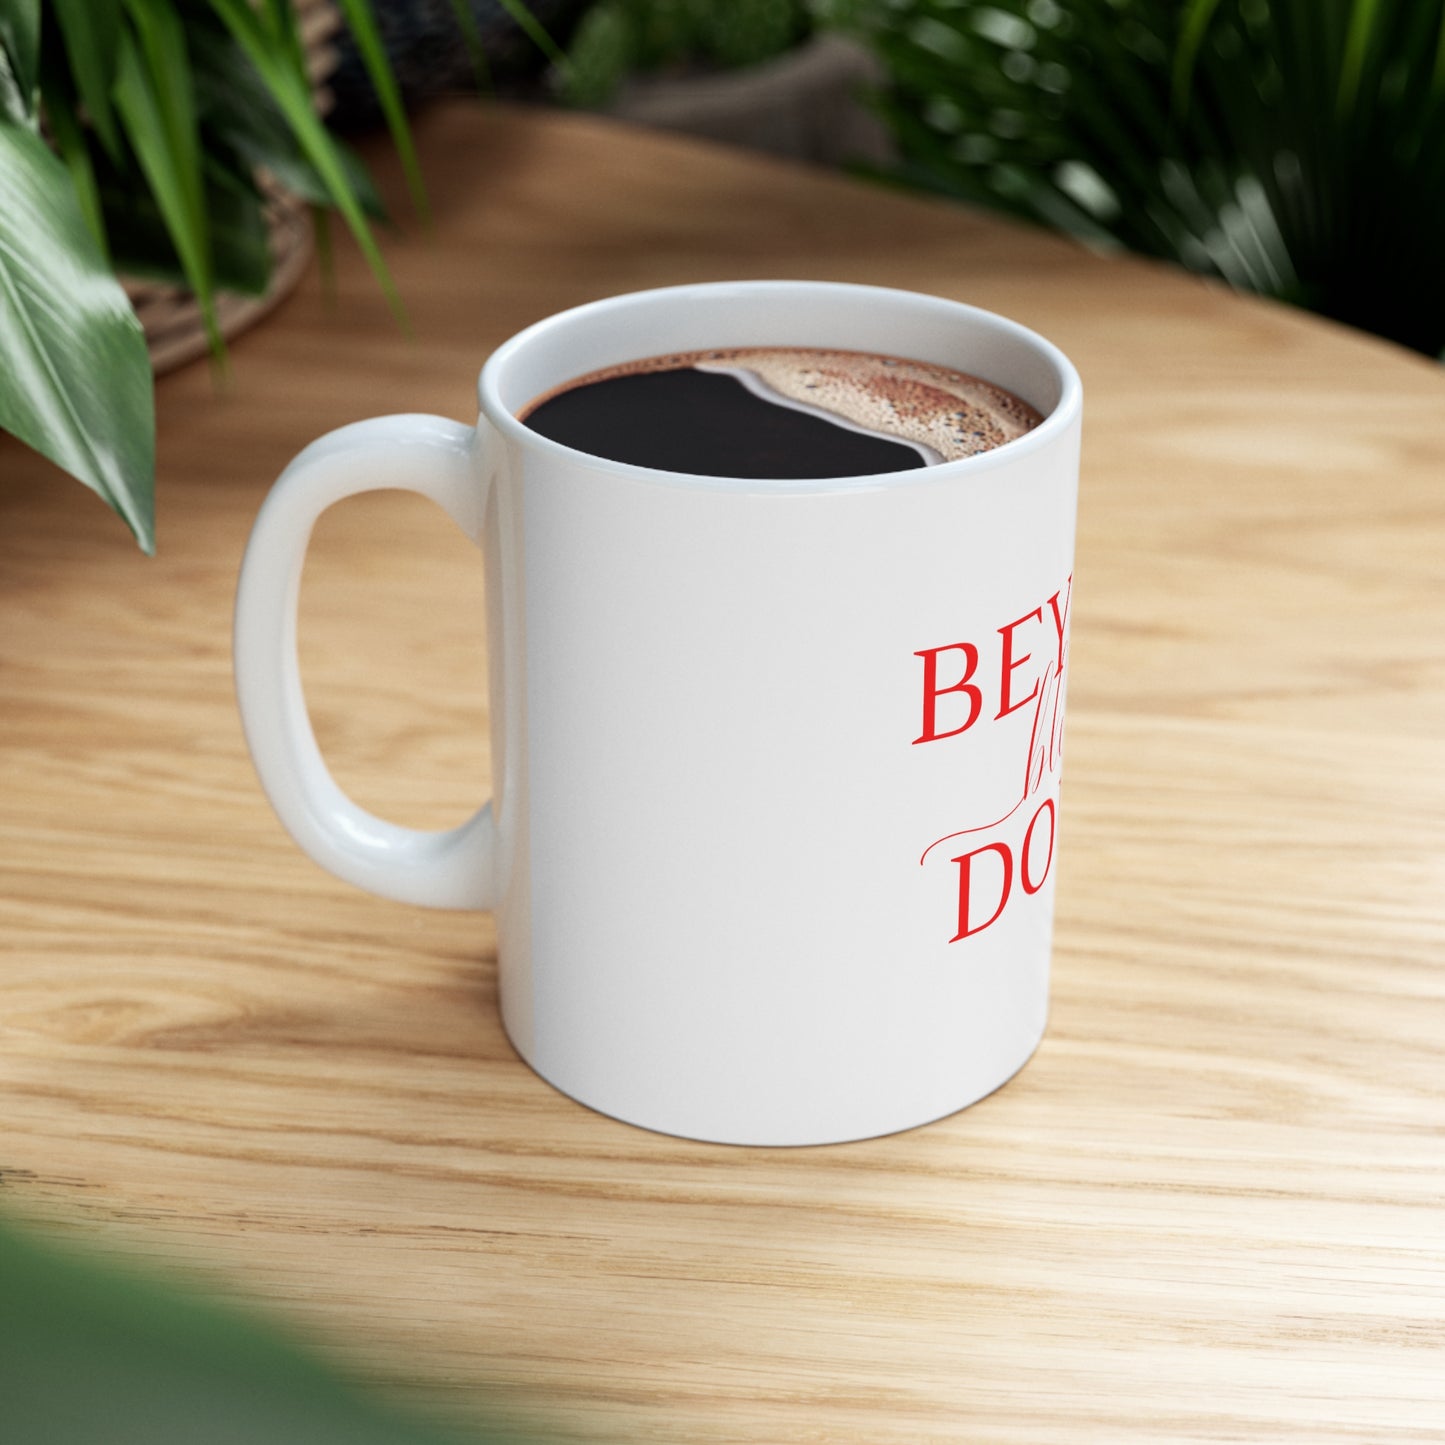 Beyond Blessed Doula - Plain Ceramic Mug 11oz